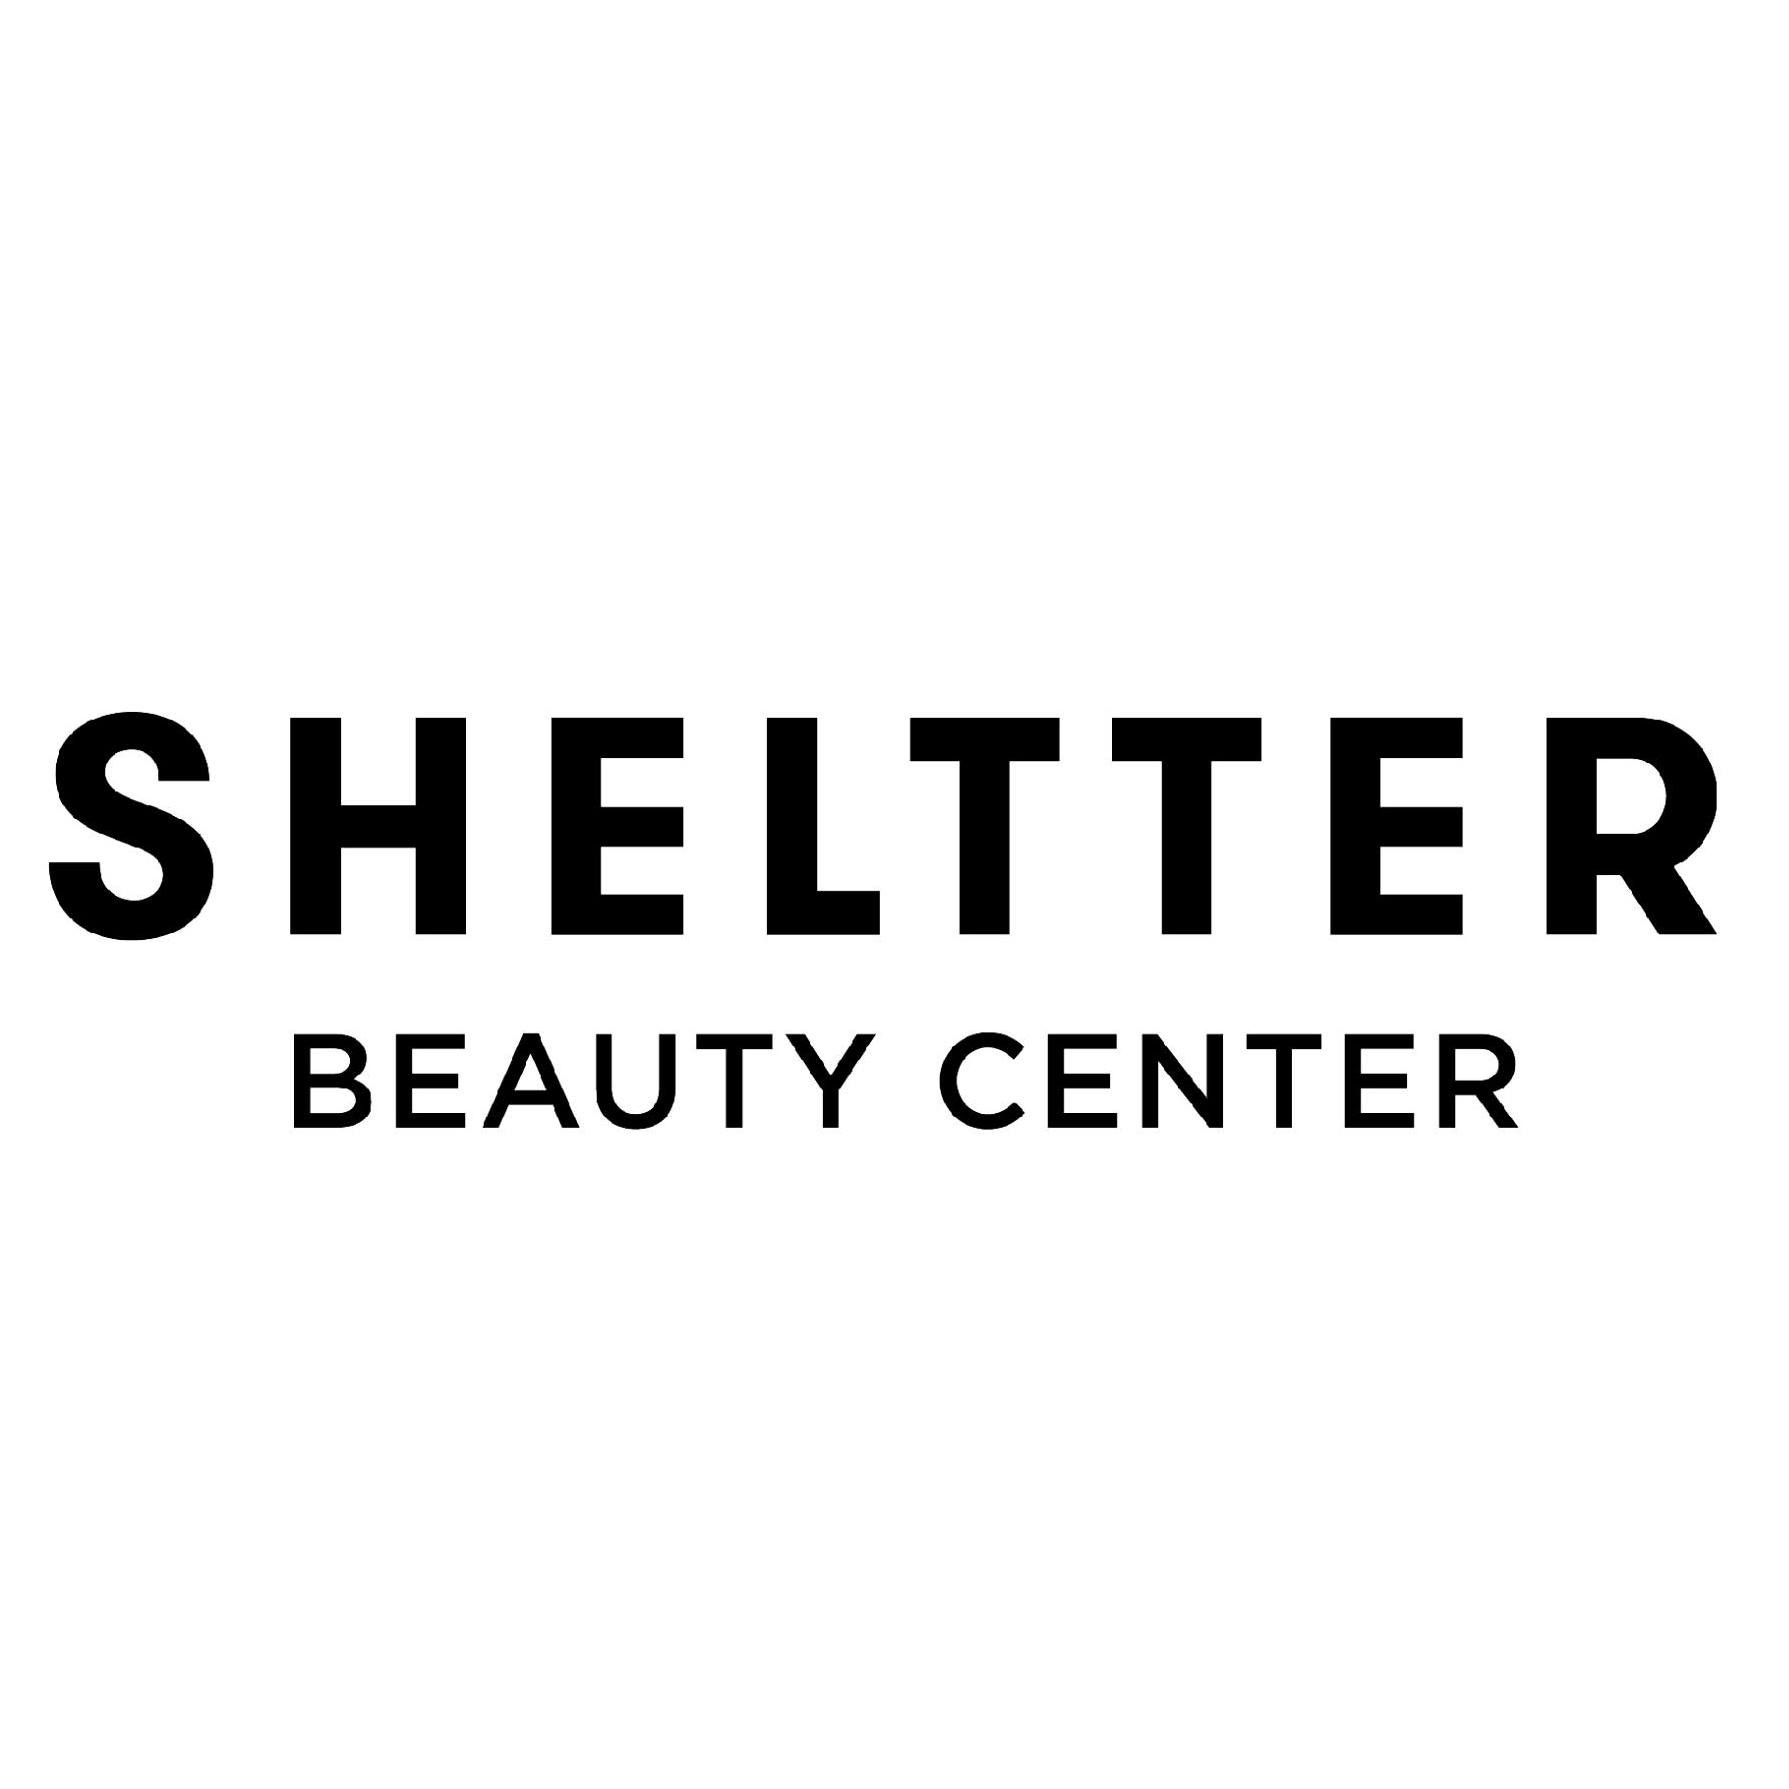 Sheltter Beauty Center - Bienne